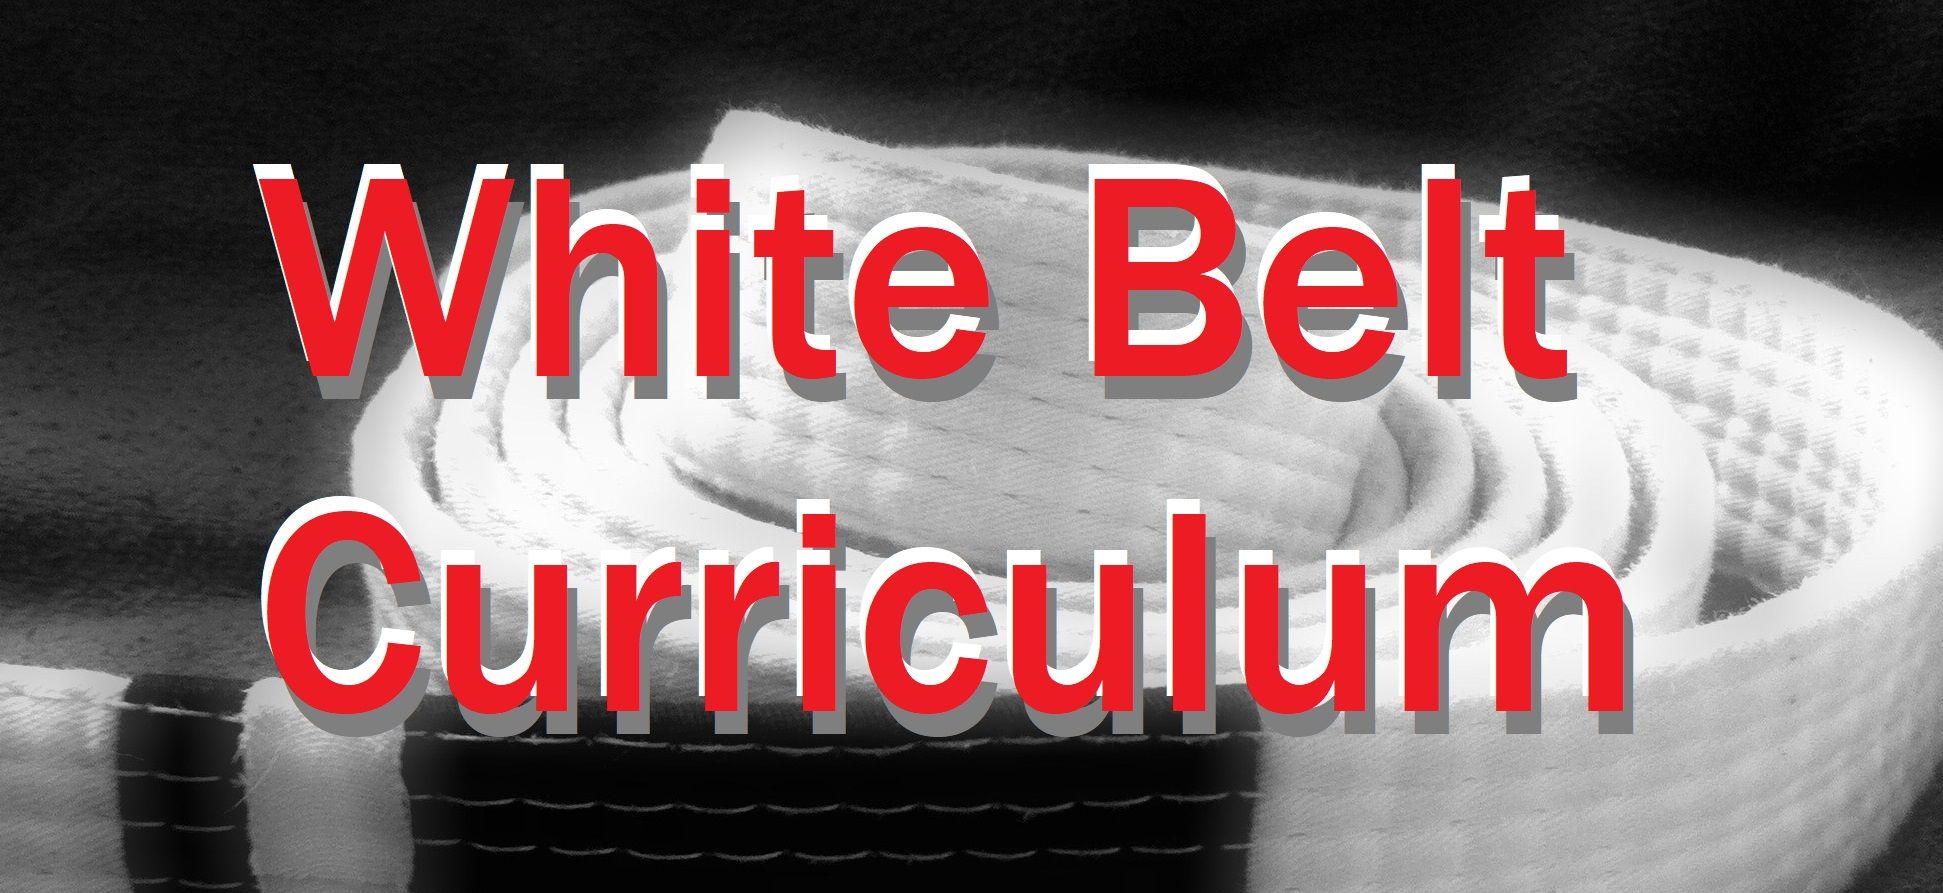 white-belt curriculum1.jpg